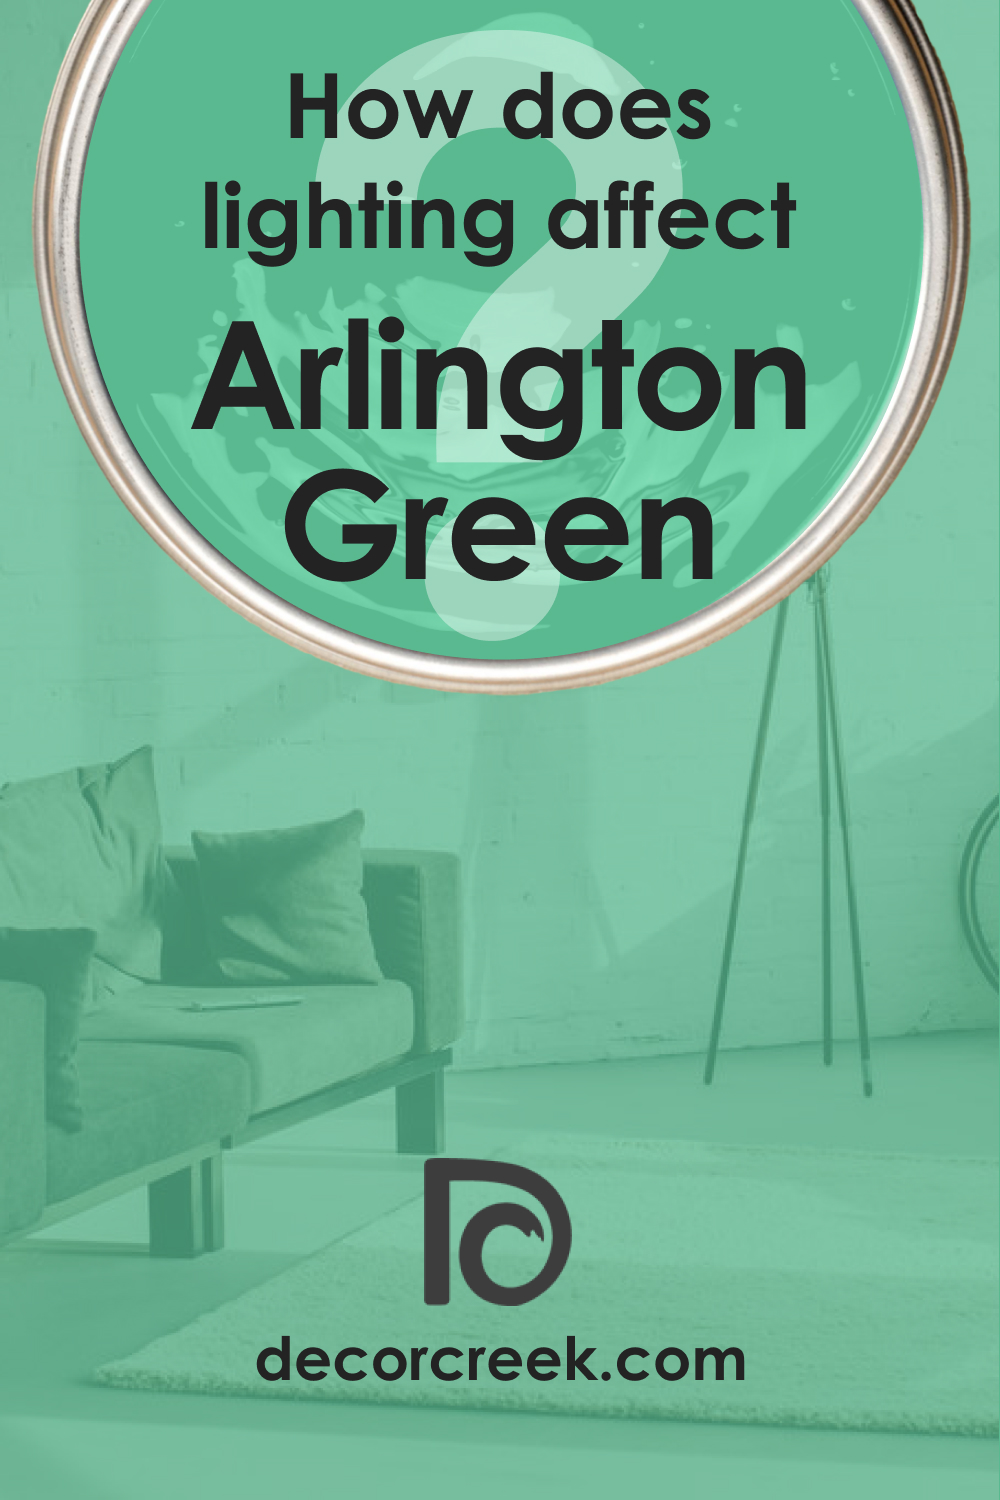 How Does Lighting Affect Arlington Green 580?